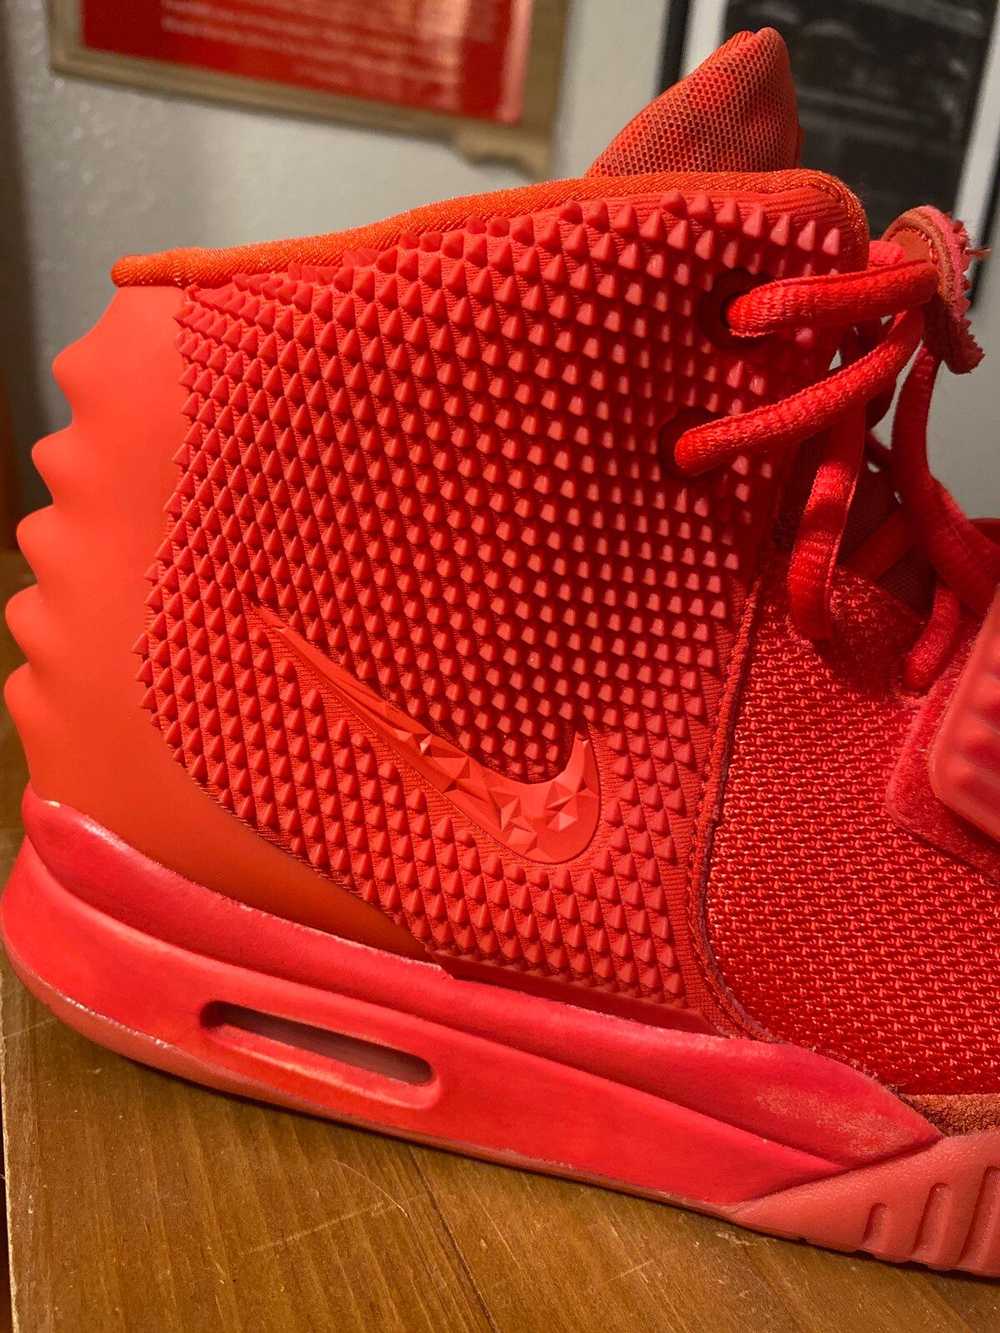 Kanye West × Nike Nike Air Yeezy 2 “Red October” - image 9